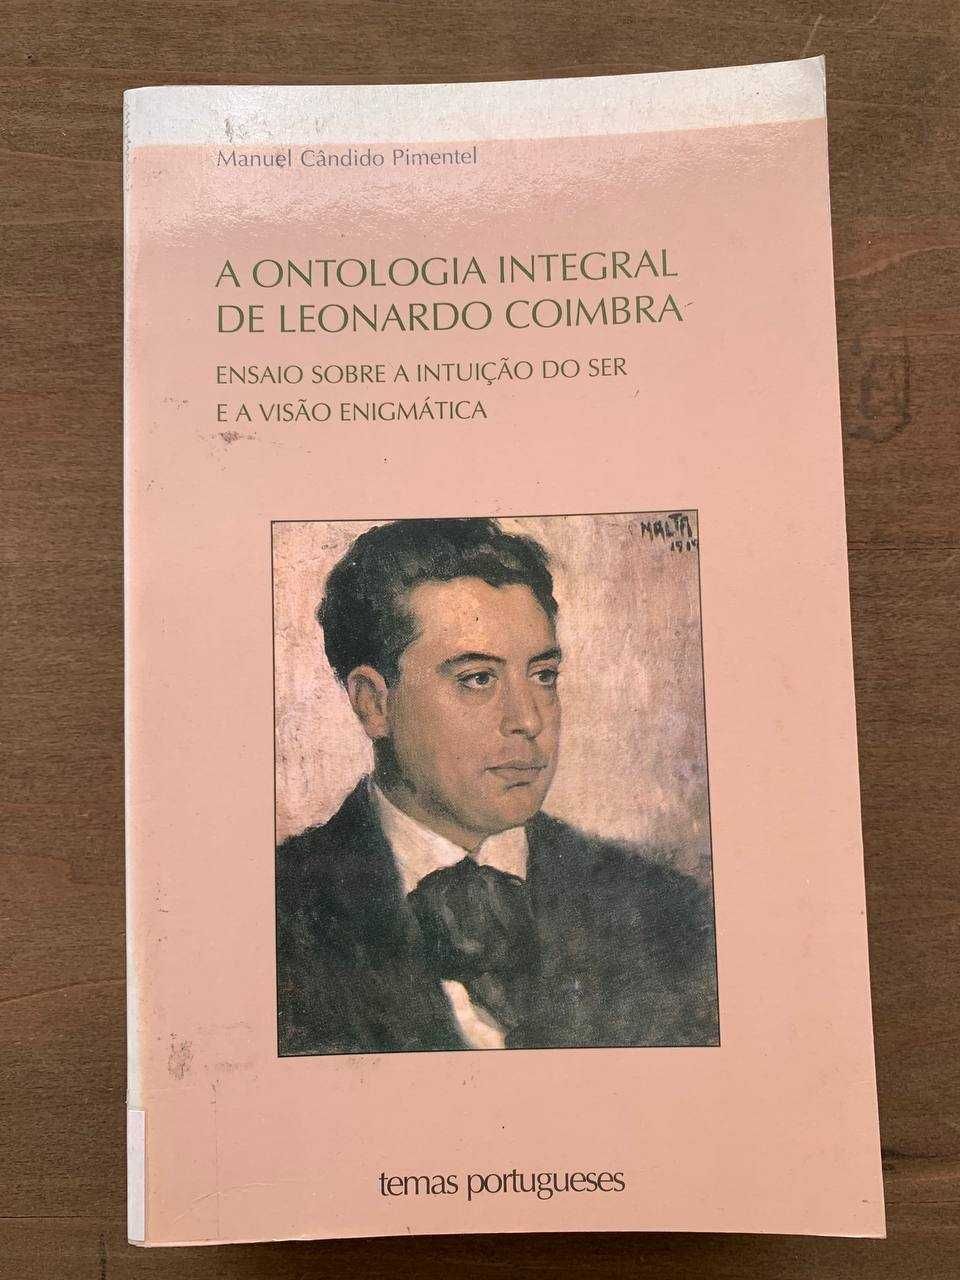 Manuel Pimentel - A Ontologia Integral de Leonardo Coimbra